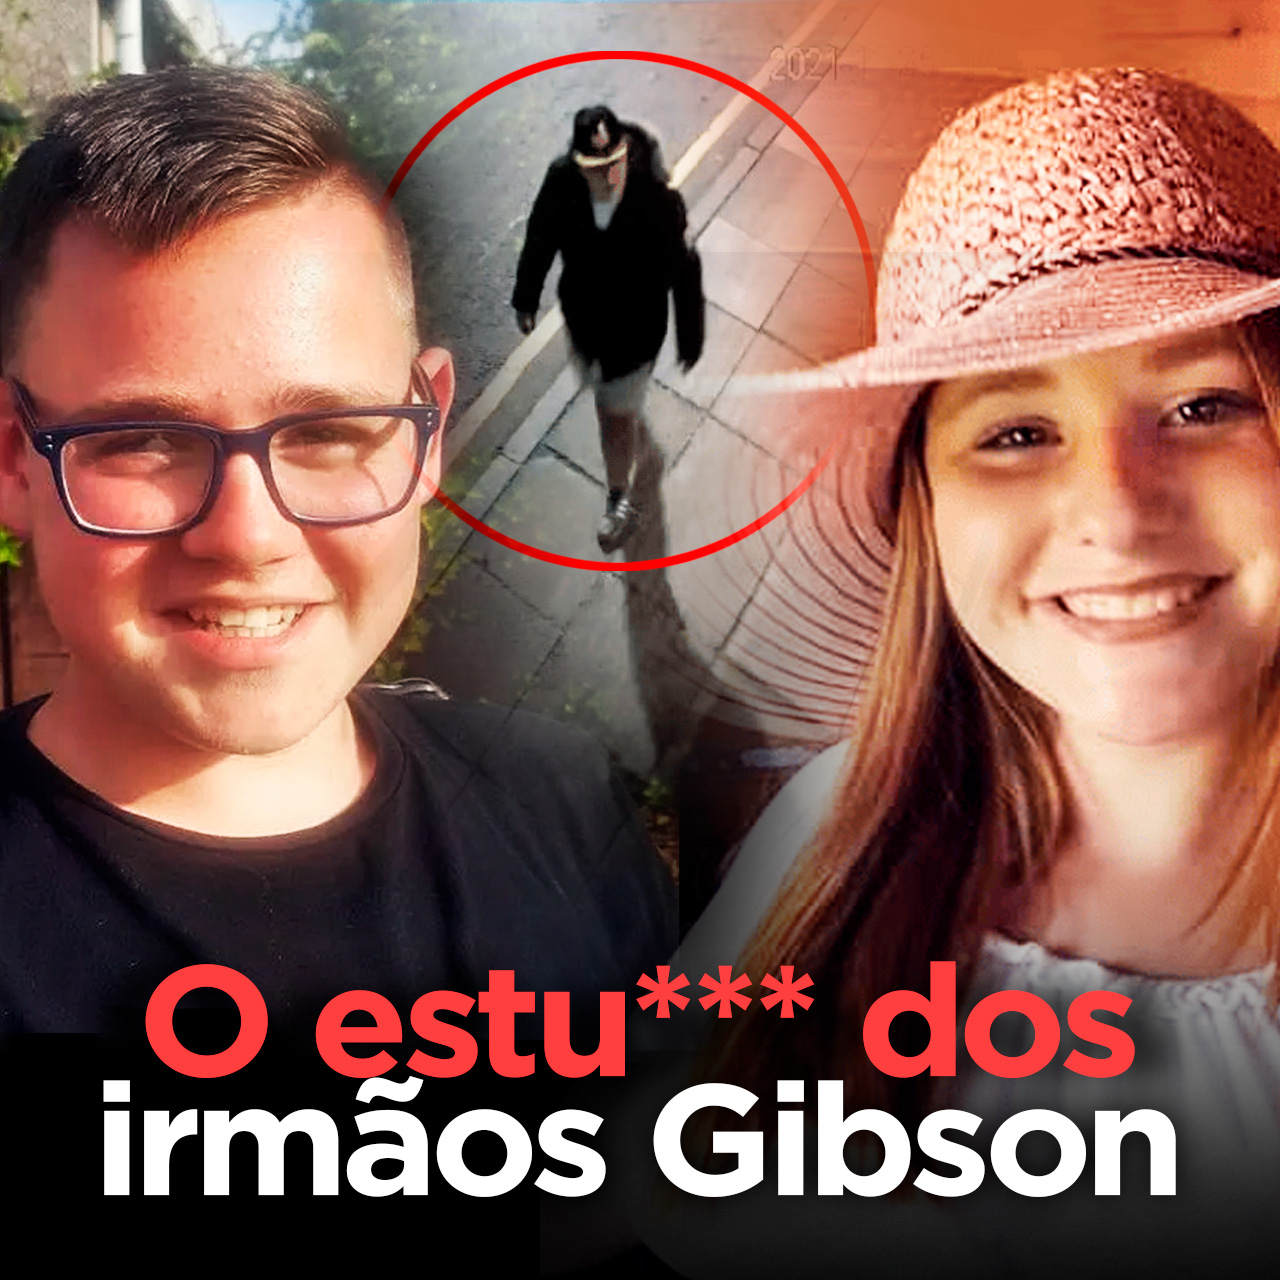 O INSANO 3STUP** e M0RT3 dos irmãos Gibson | Amber Gibson